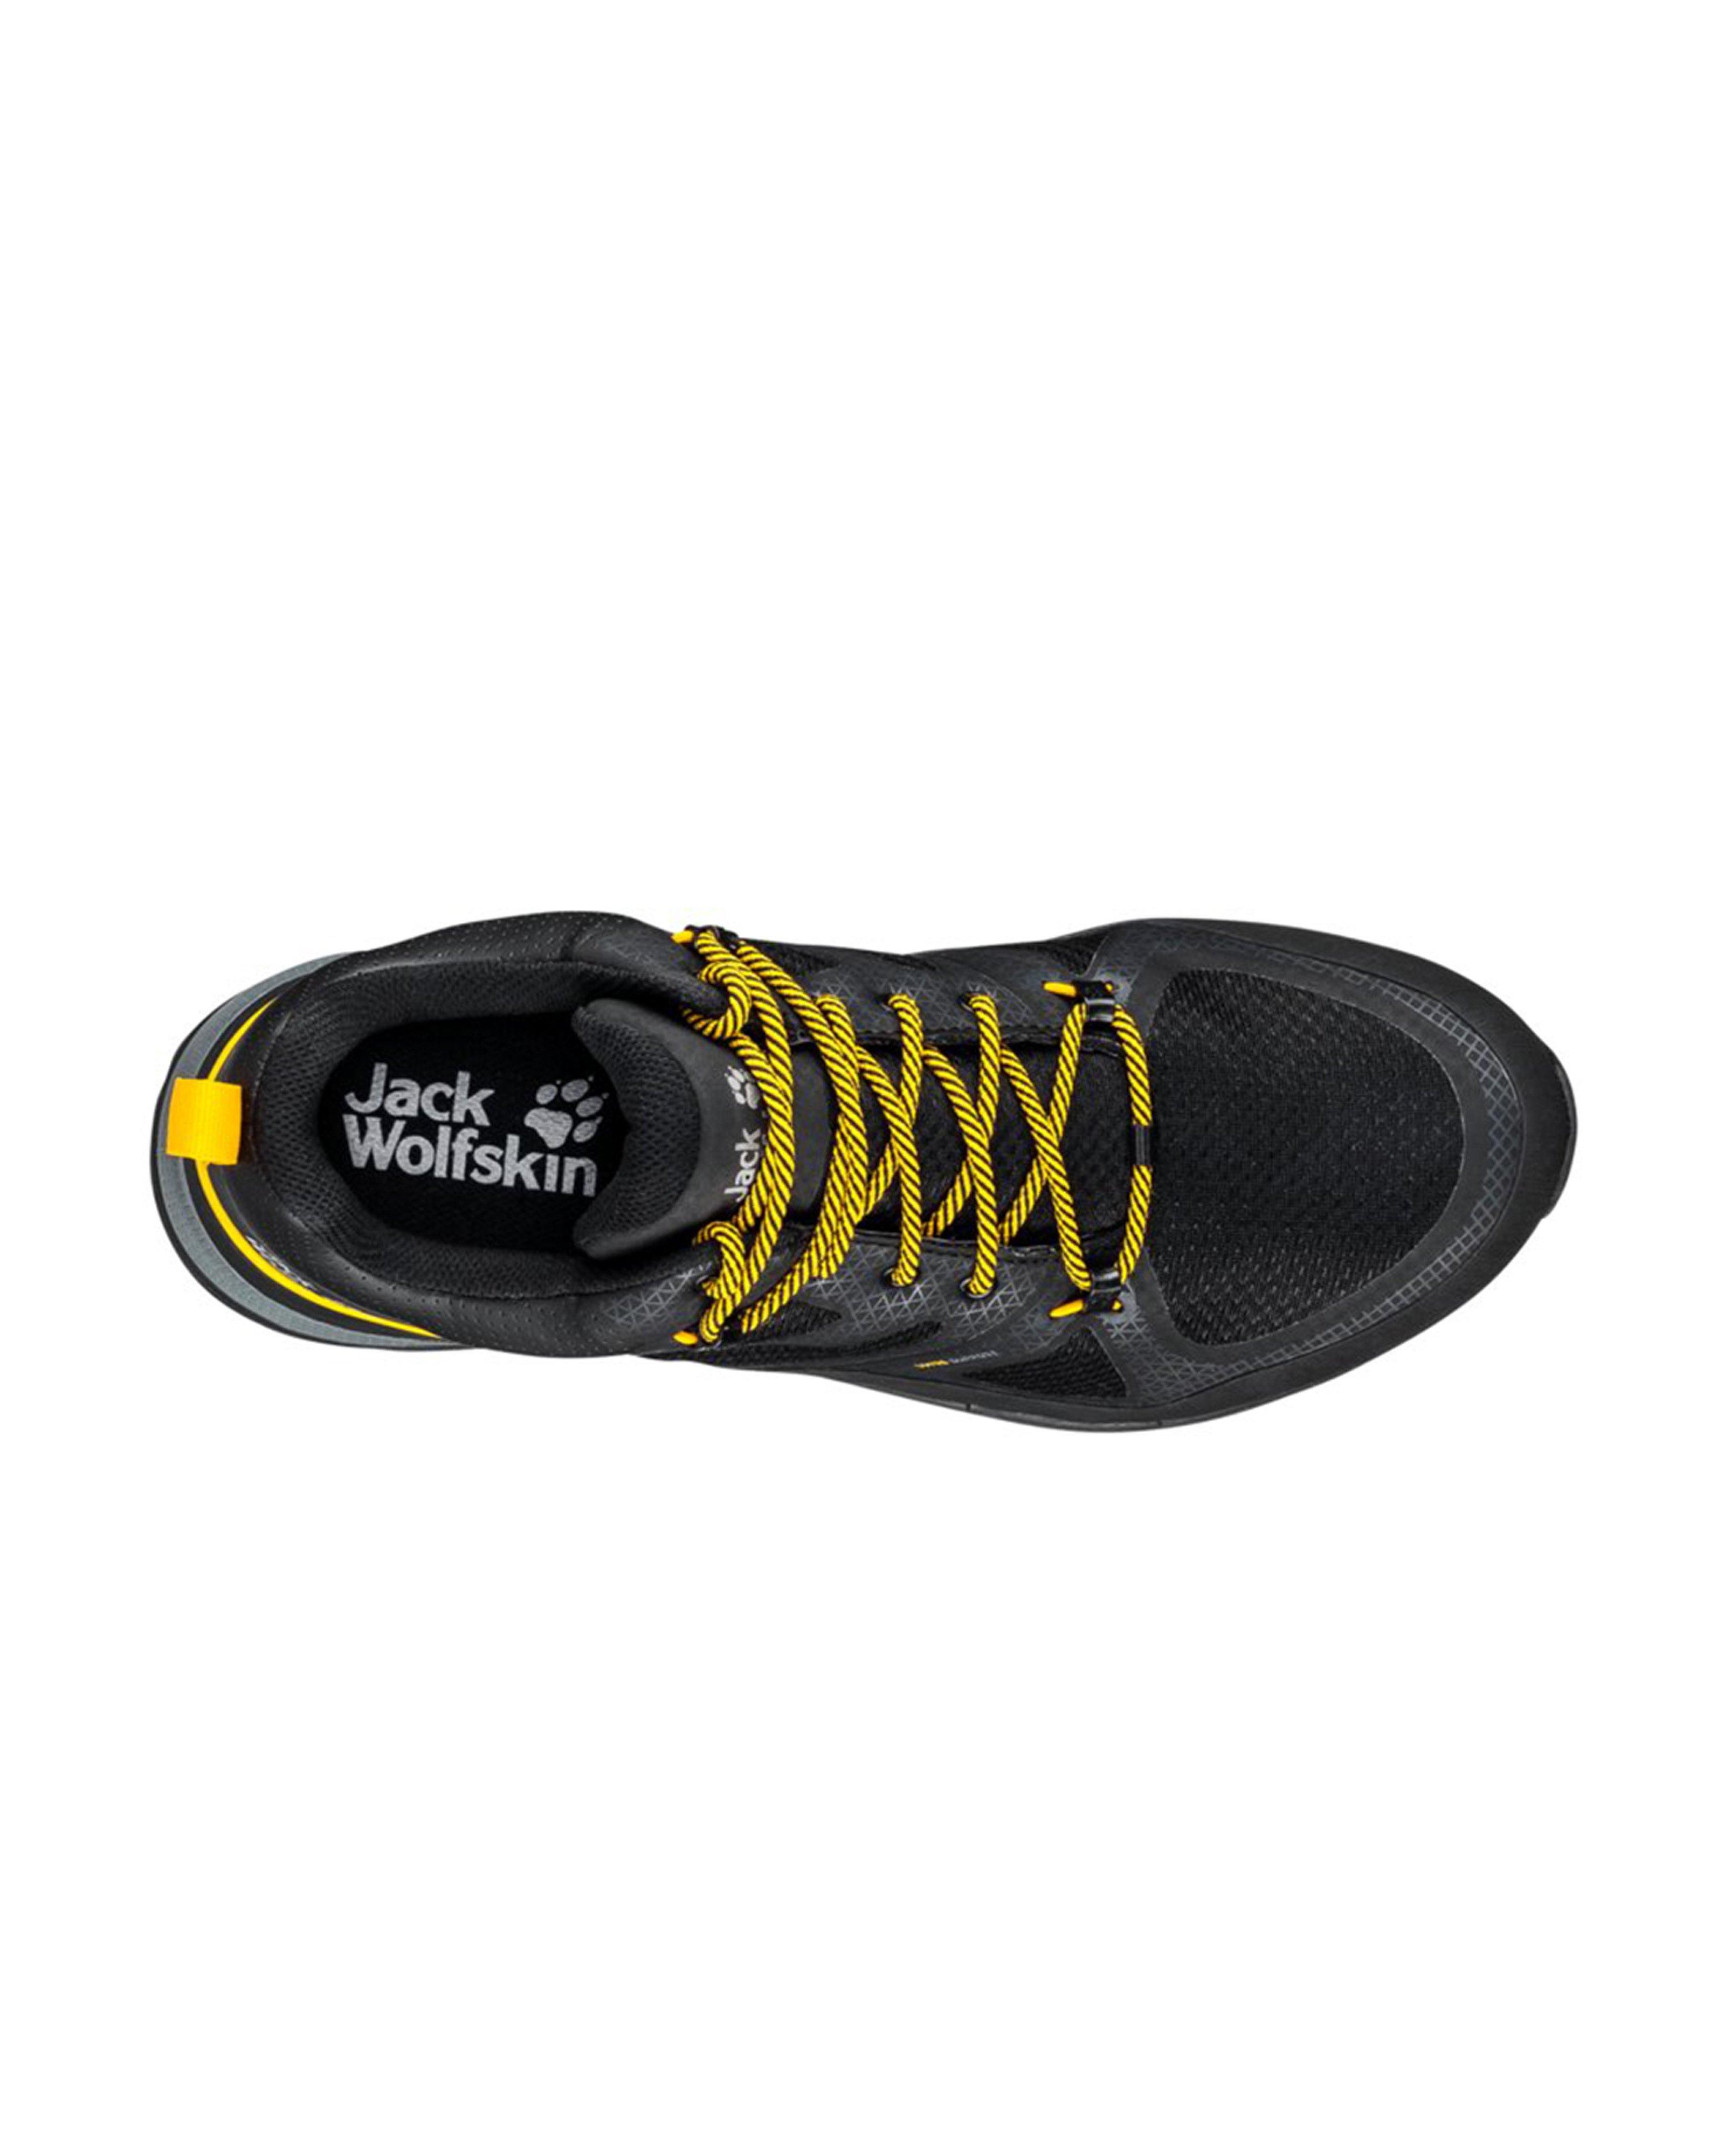 Jack Wolfskin Men’s Force Striker Texapore Low Hiking Shoes  -  Black